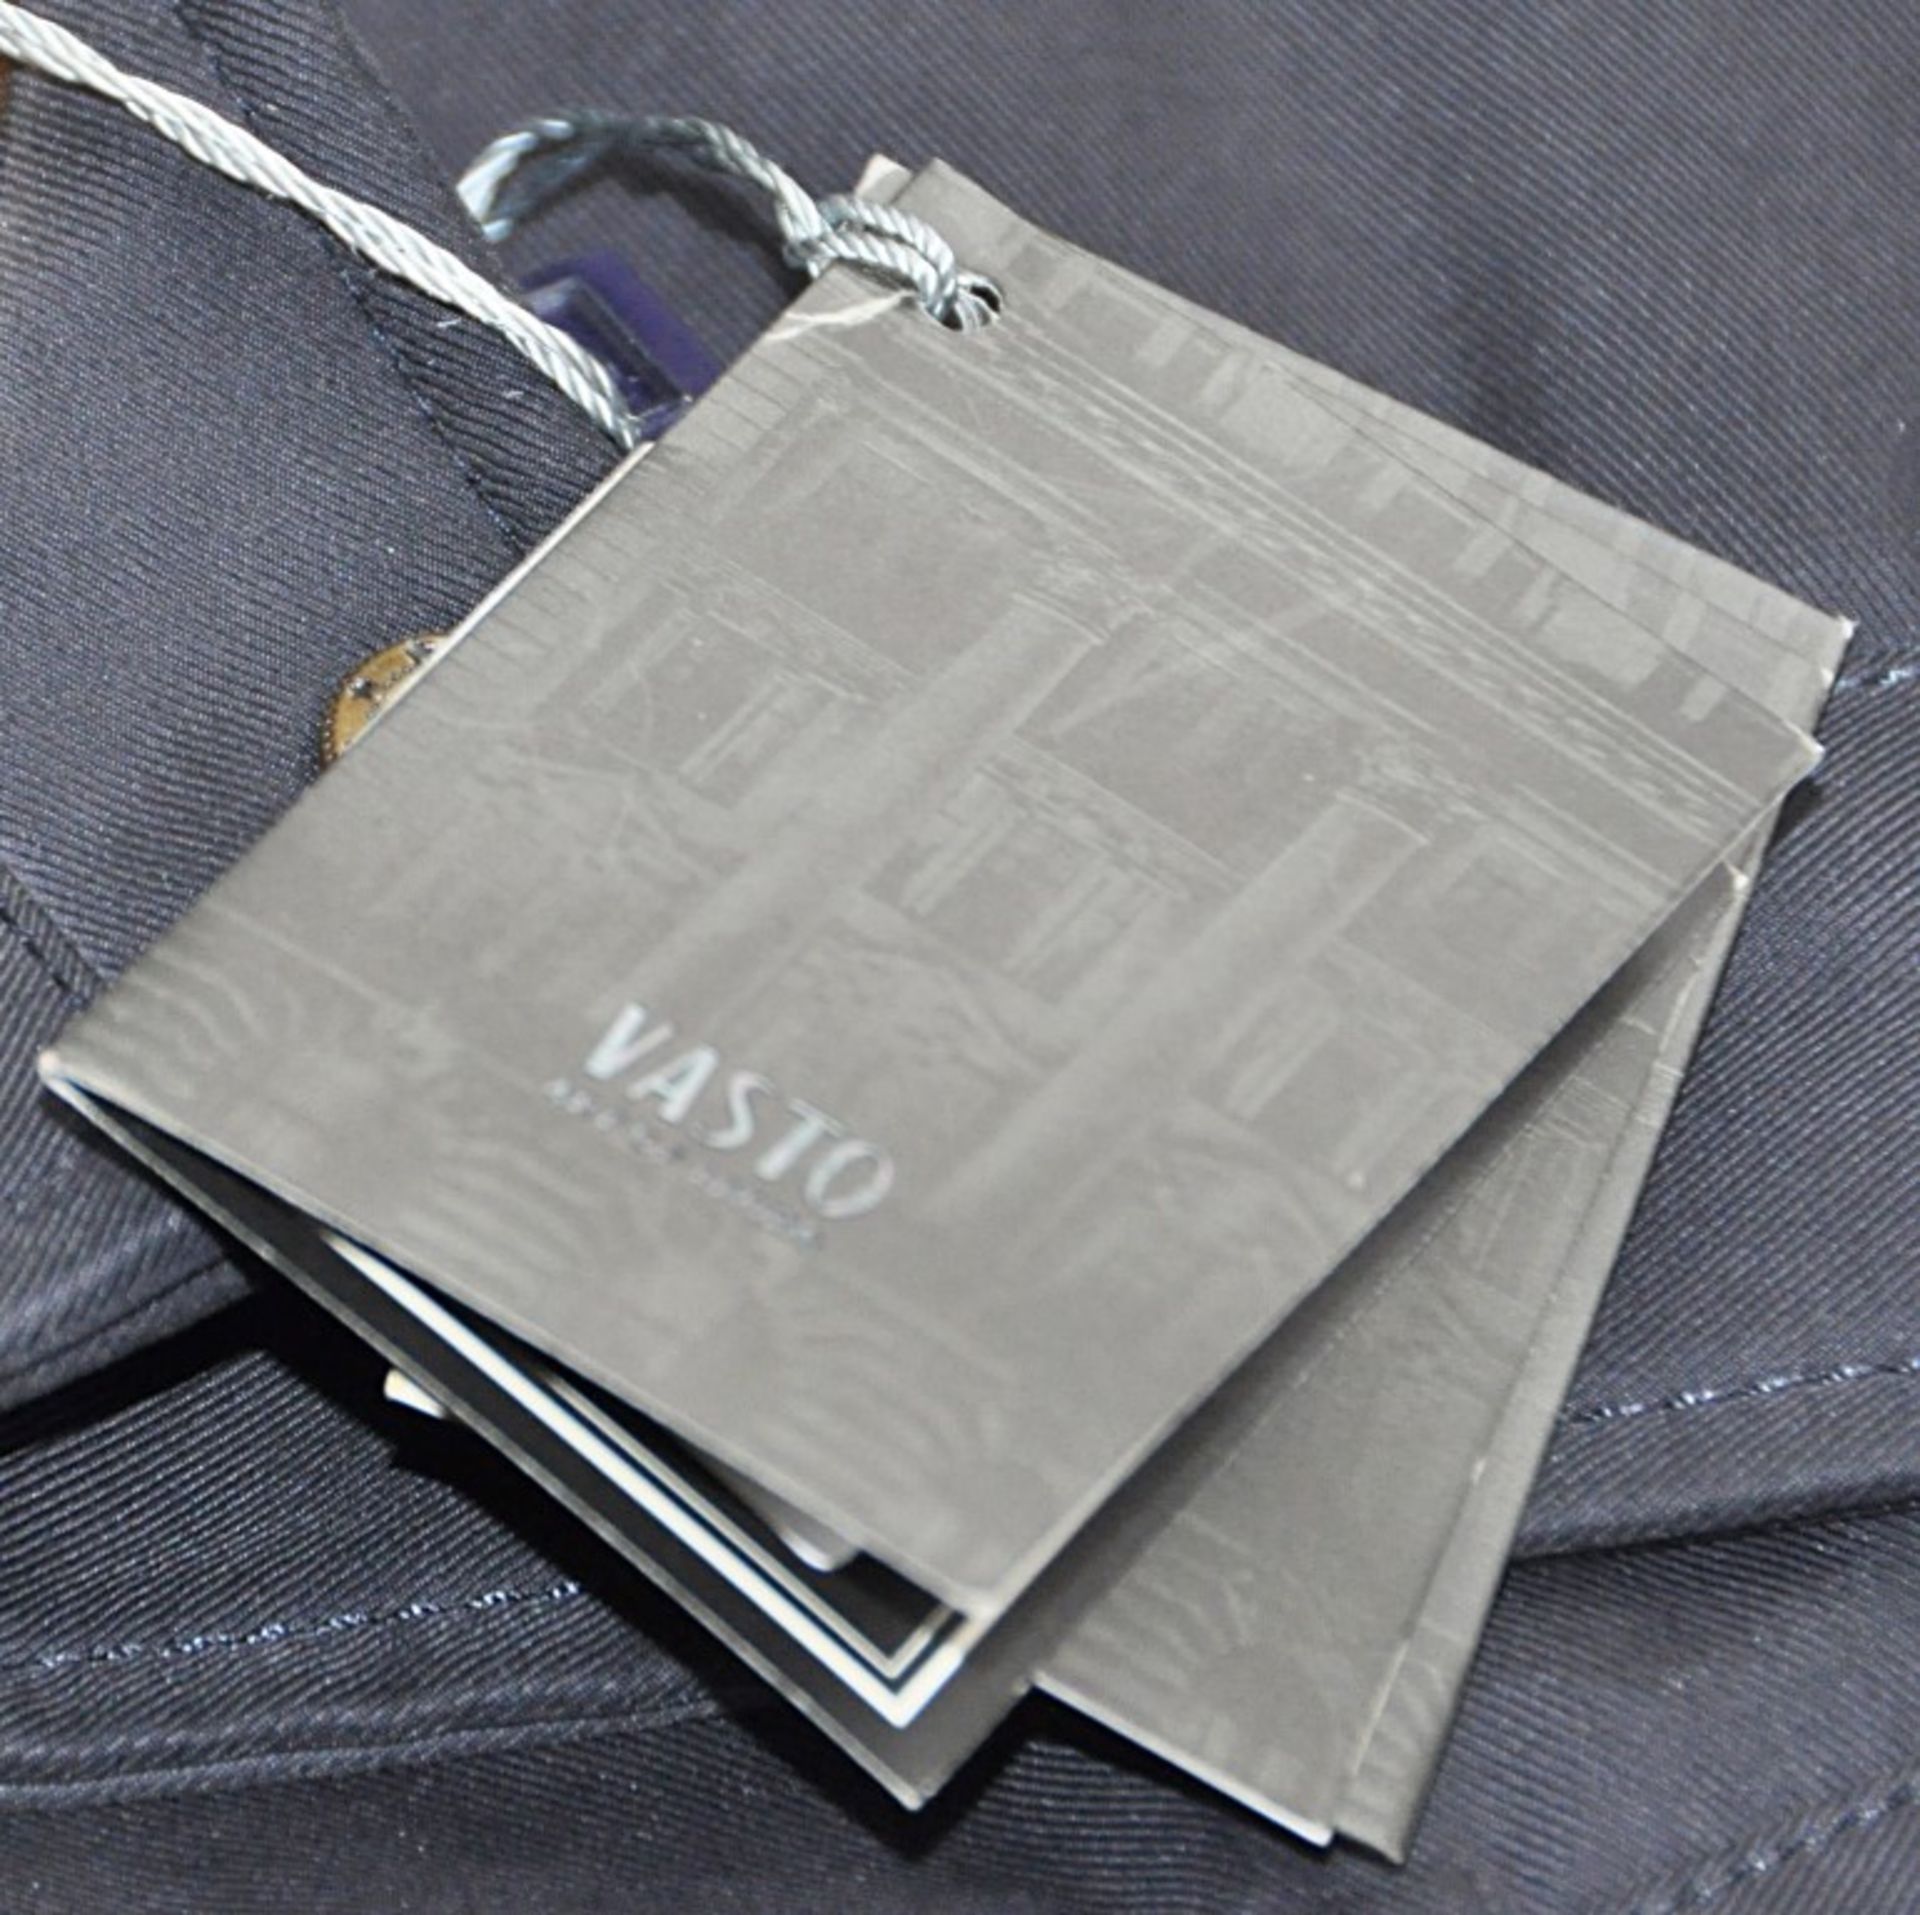 1 x Men's Long Sleeve Casual Jacket By International Luxury Brand "Vasto" (BAJ72241) – Size: - Image 6 of 6